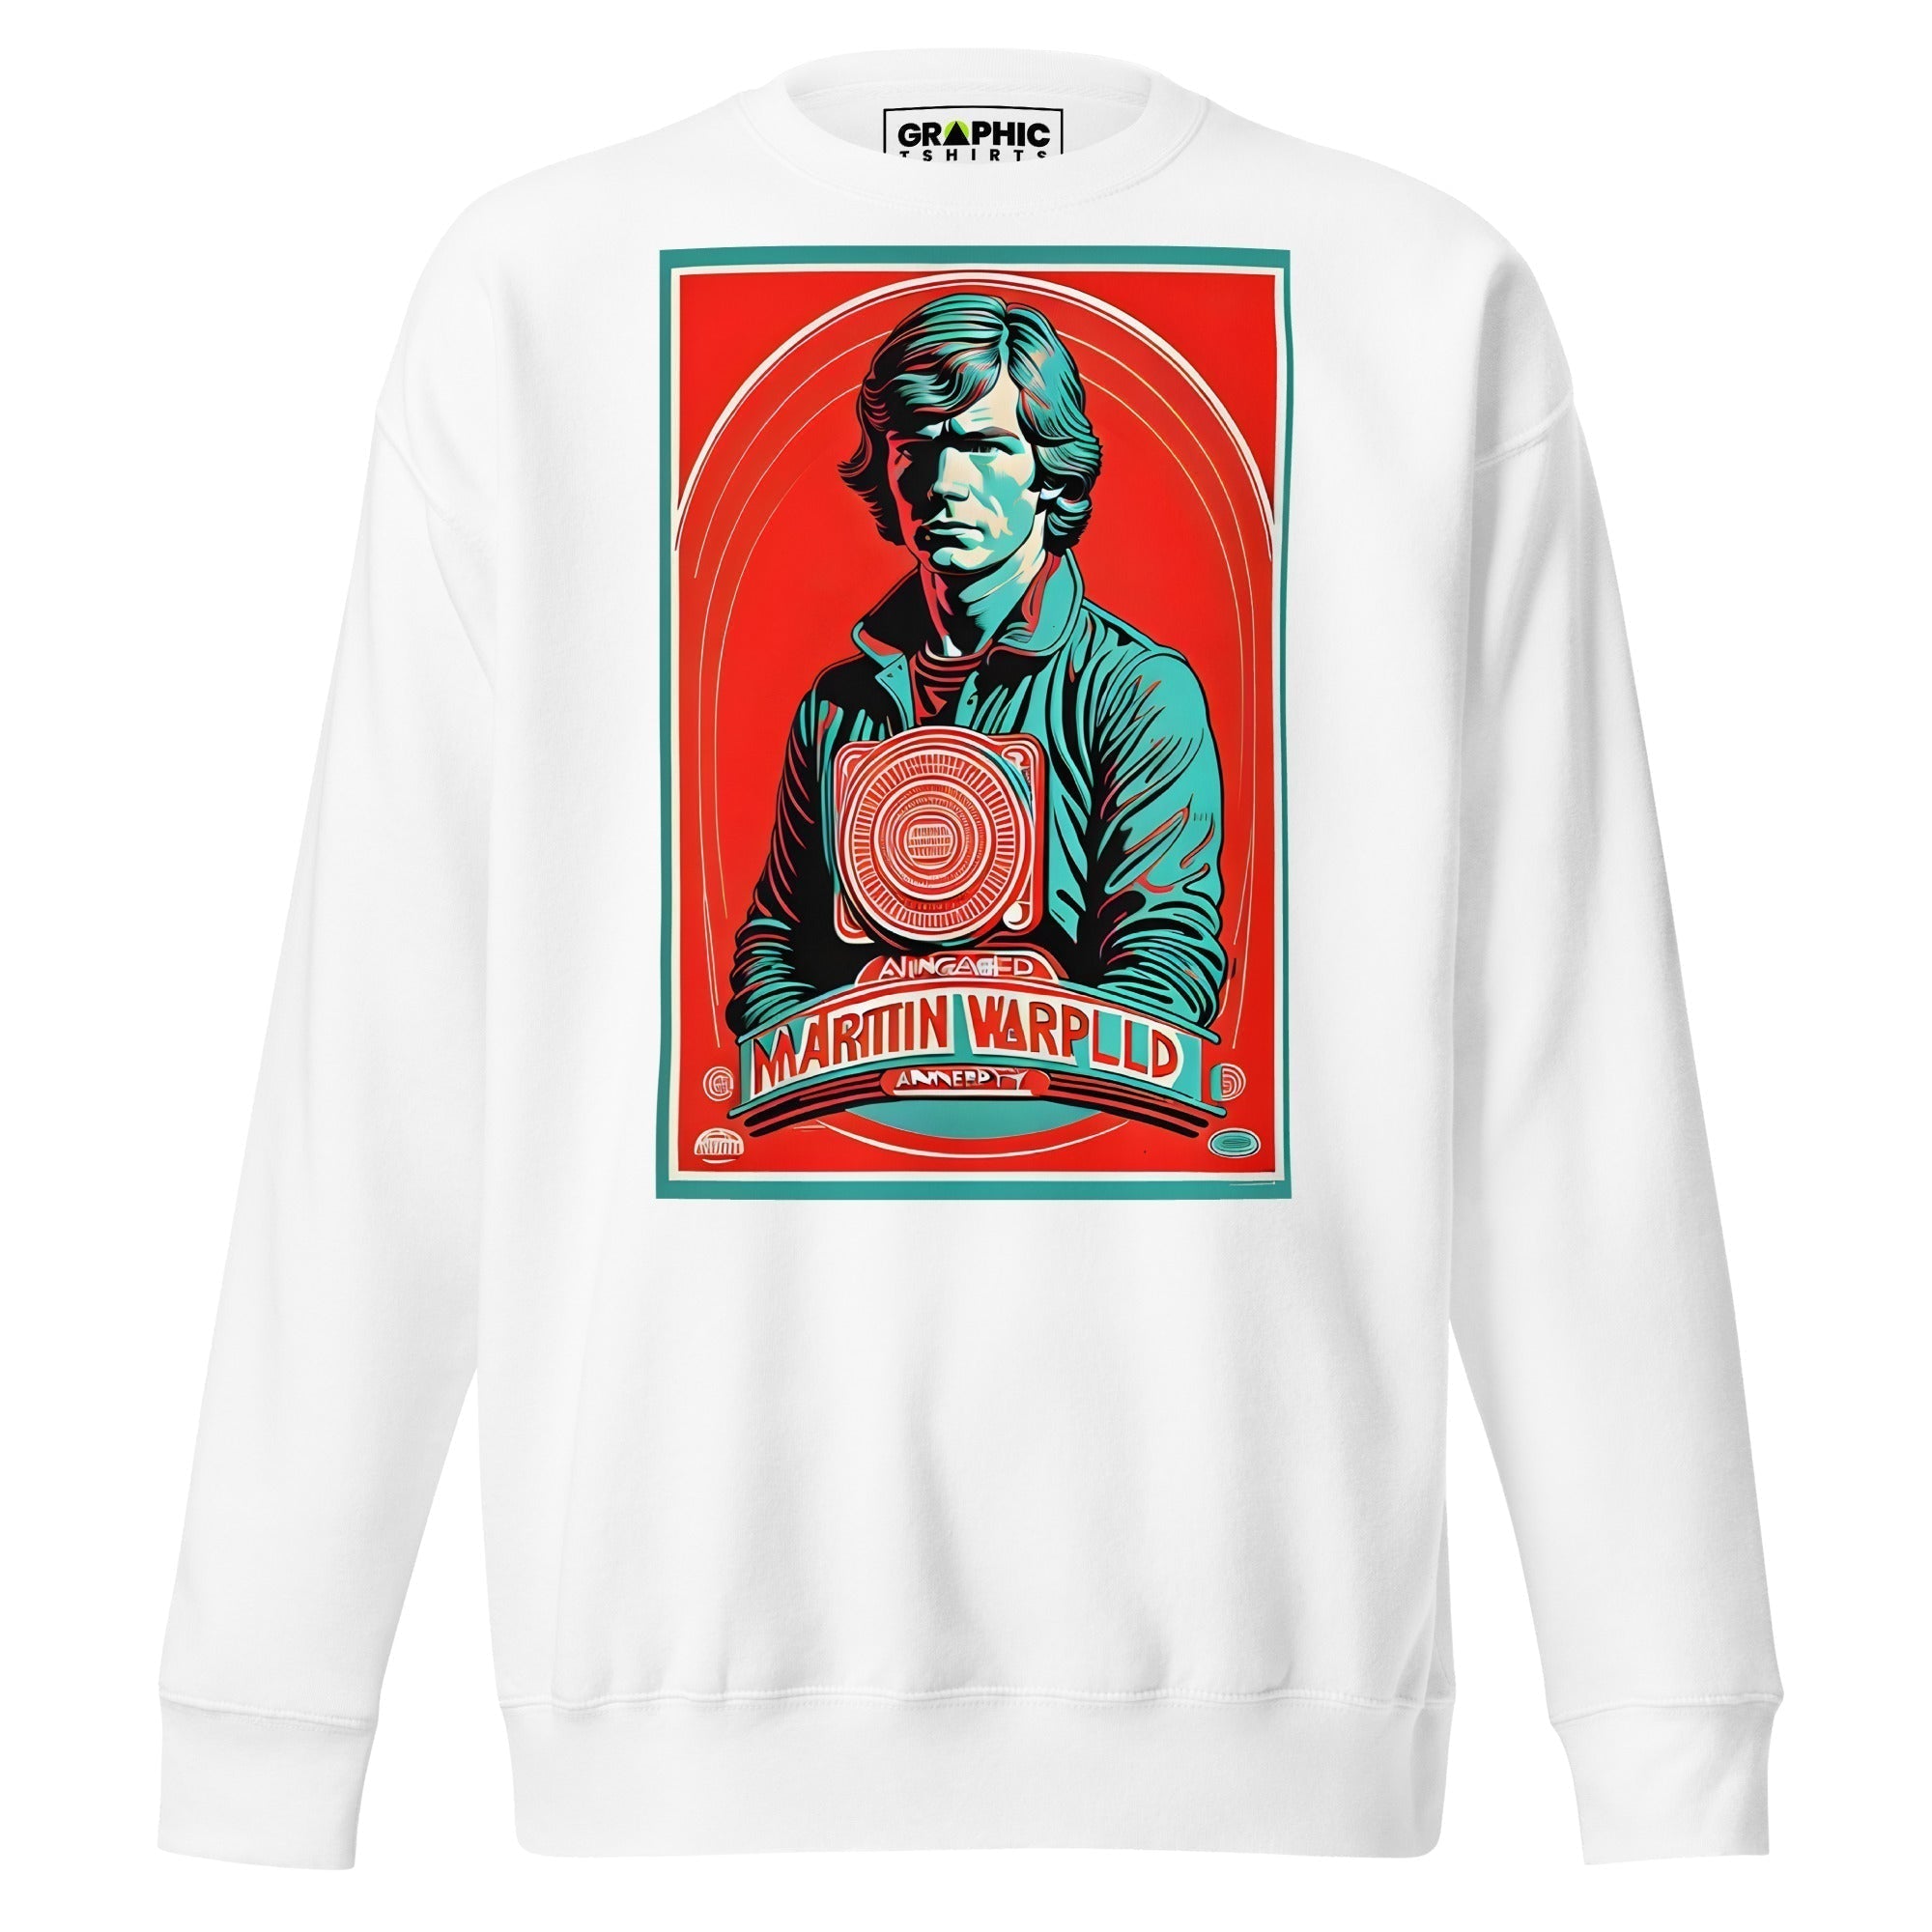 Unisex Premium Sweatshirt - Vintage American Superstar Series v.2 - GRAPHIC T-SHIRTS